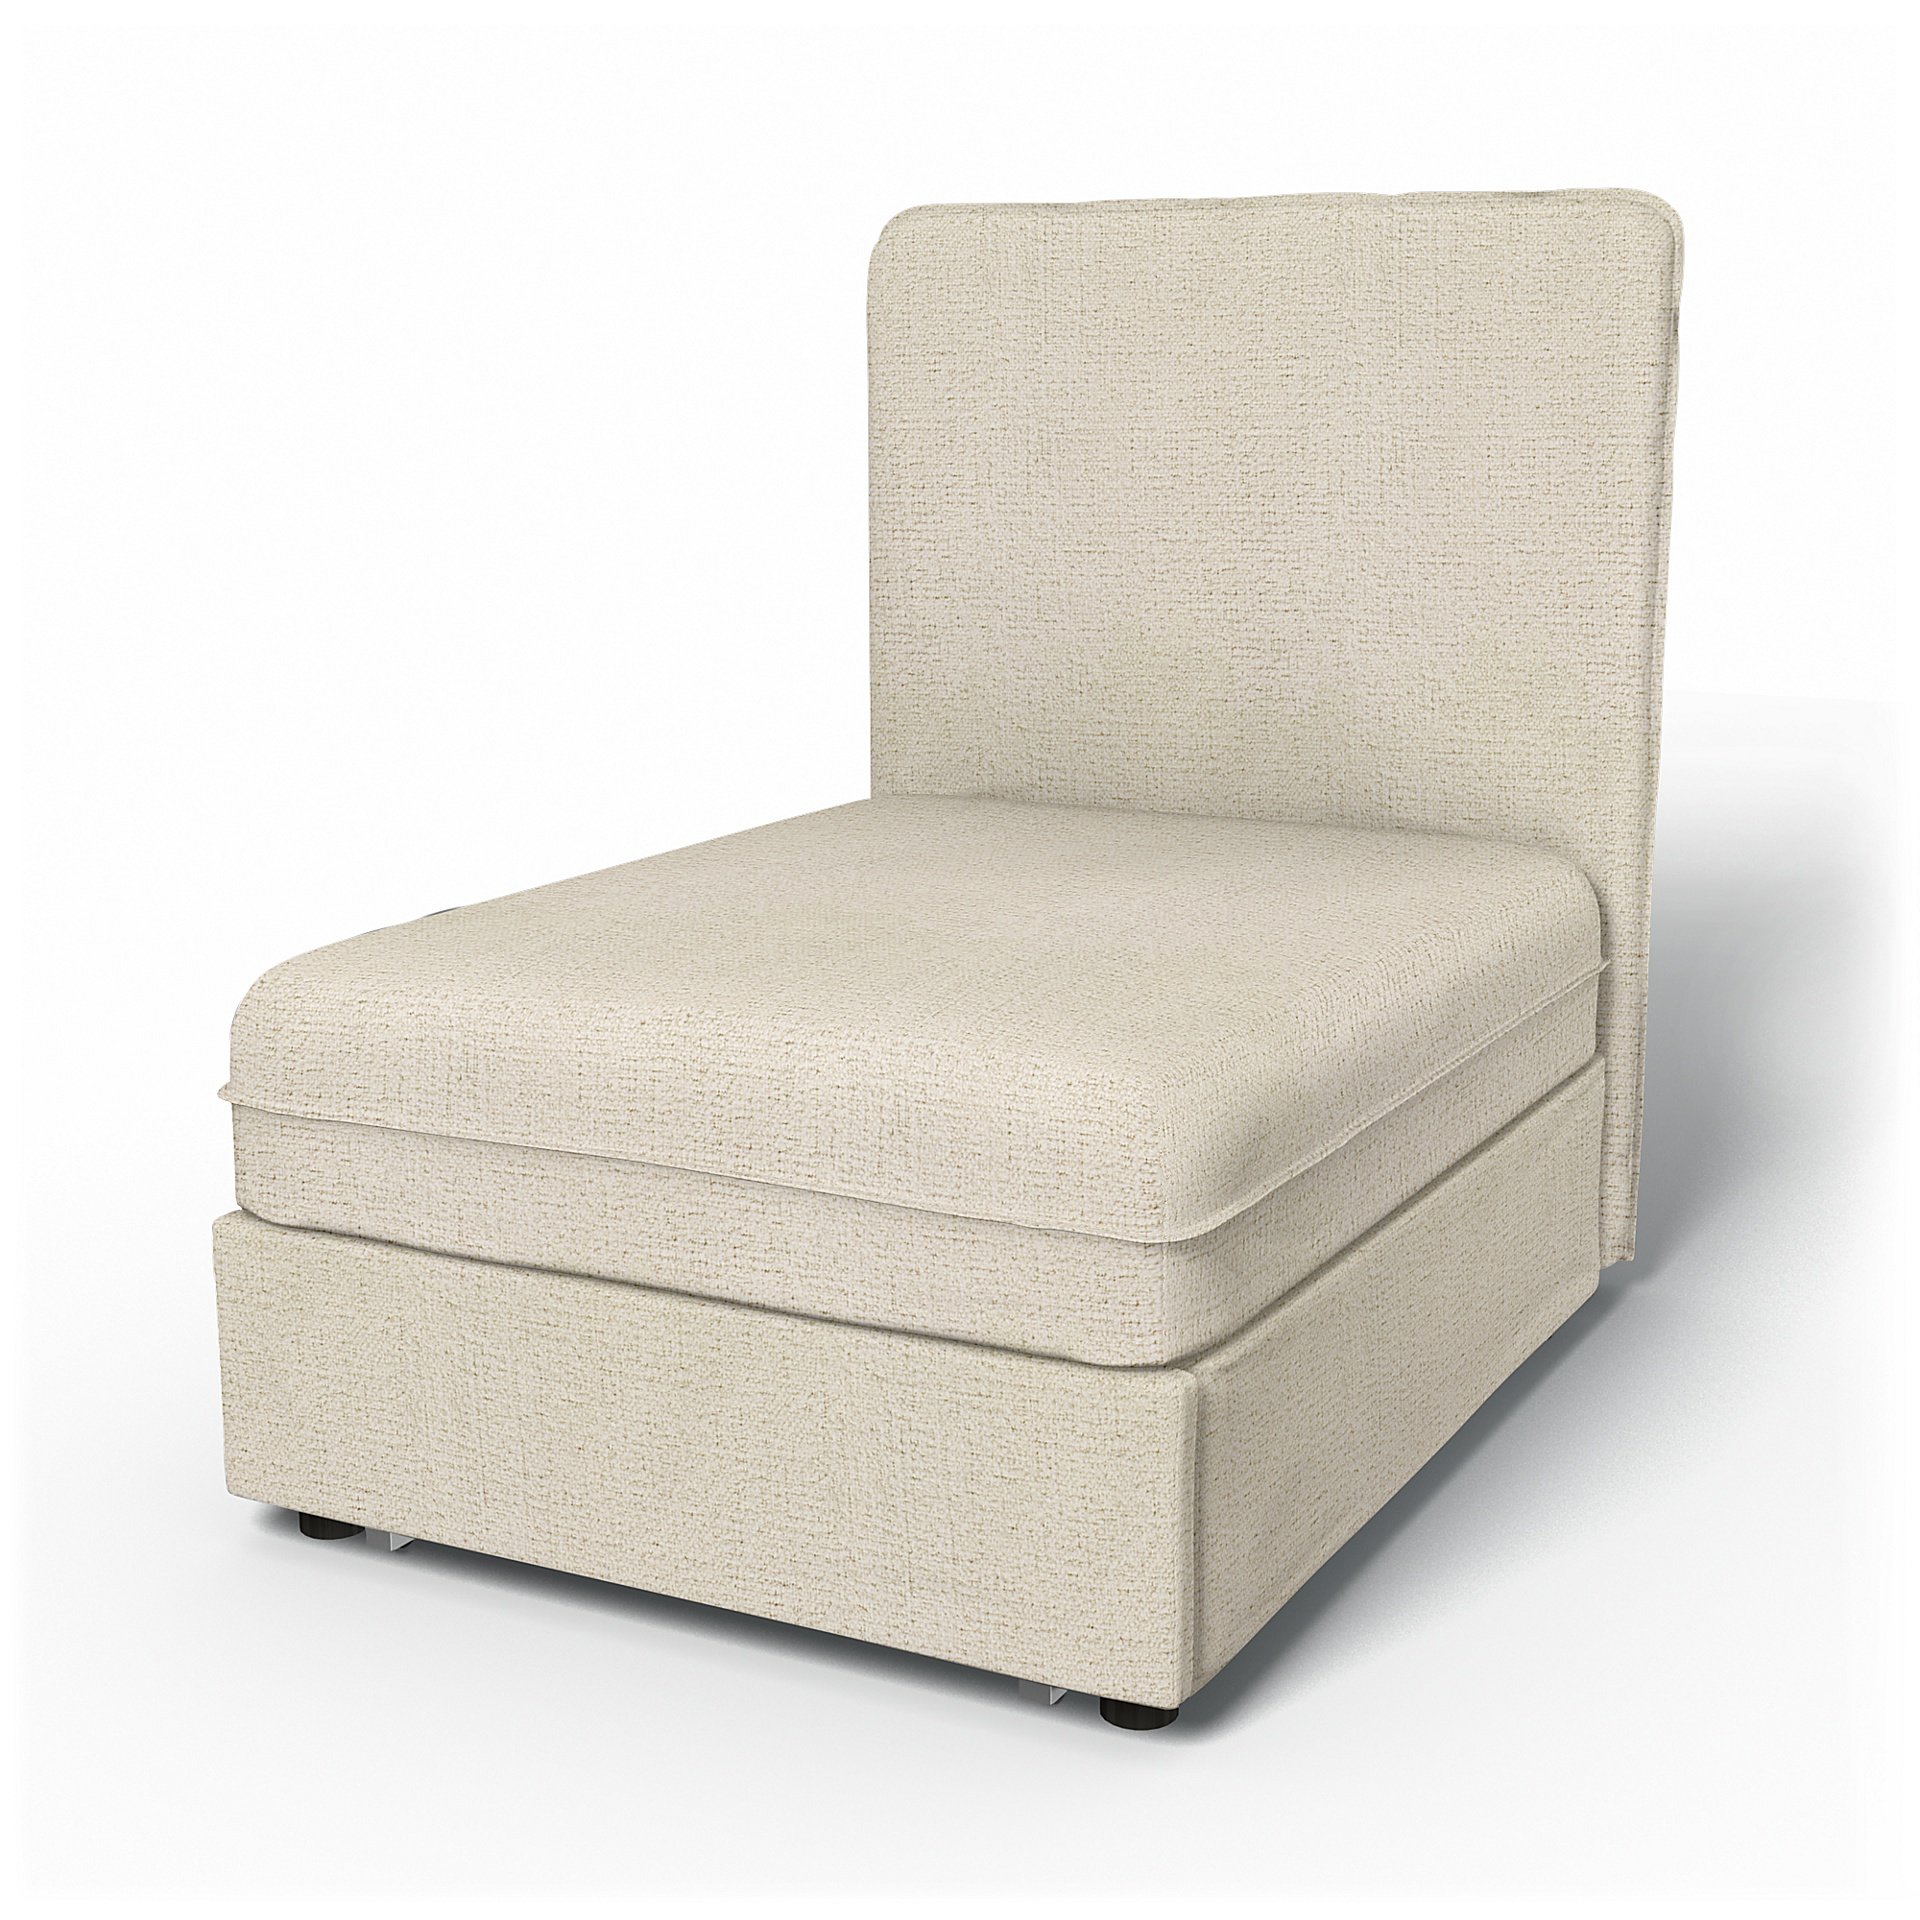 IKEA - Vallentuna Seat Module with High Back Sofa Bed Cover (80x100x46cm), Ecru, Boucle & Texture - 